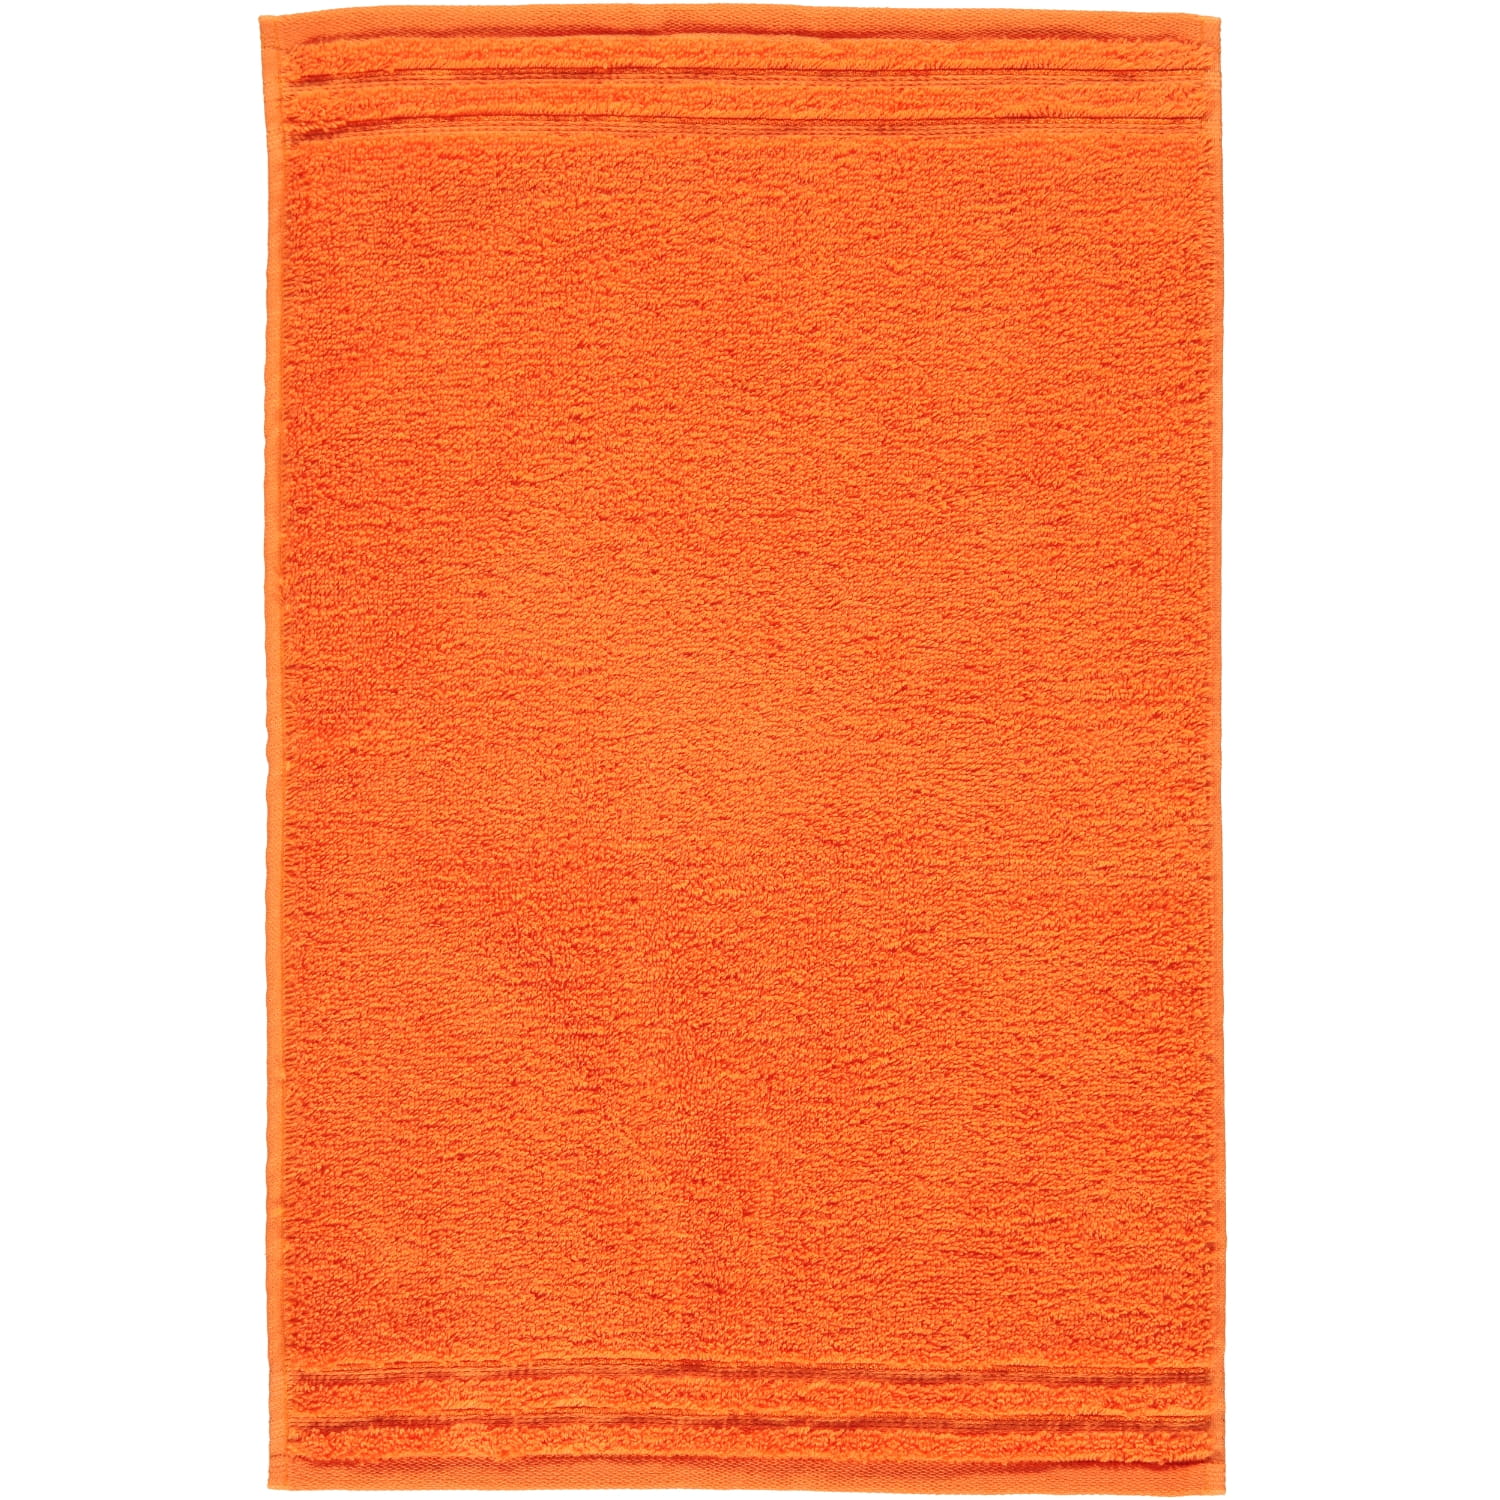 Vossen Calypso Feeling - Farbe: orange - 255 | Vossen Handtücher | Vossen |  Marken | Badetücher